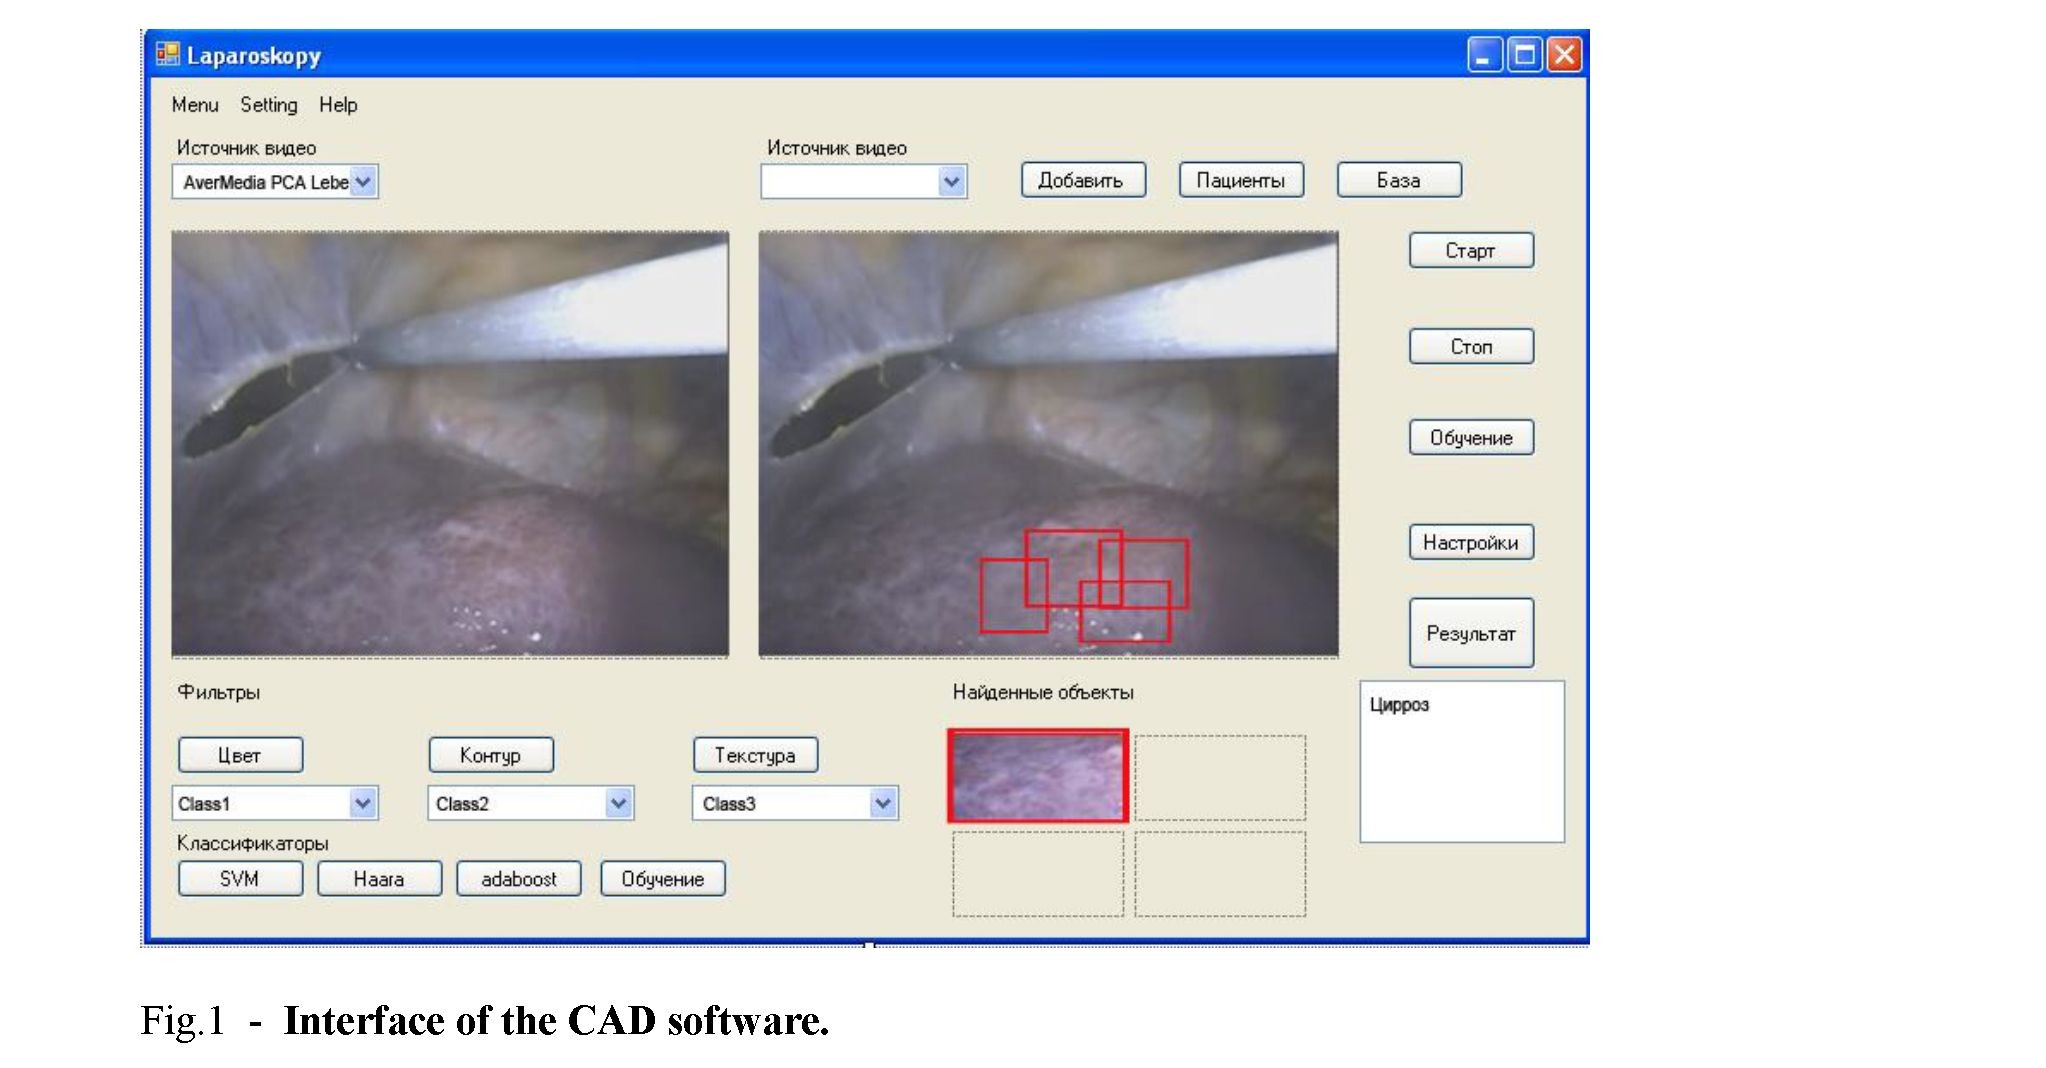 Computer automatic diagnostics (cad) of appenidicites based on classification of laparoscopic images